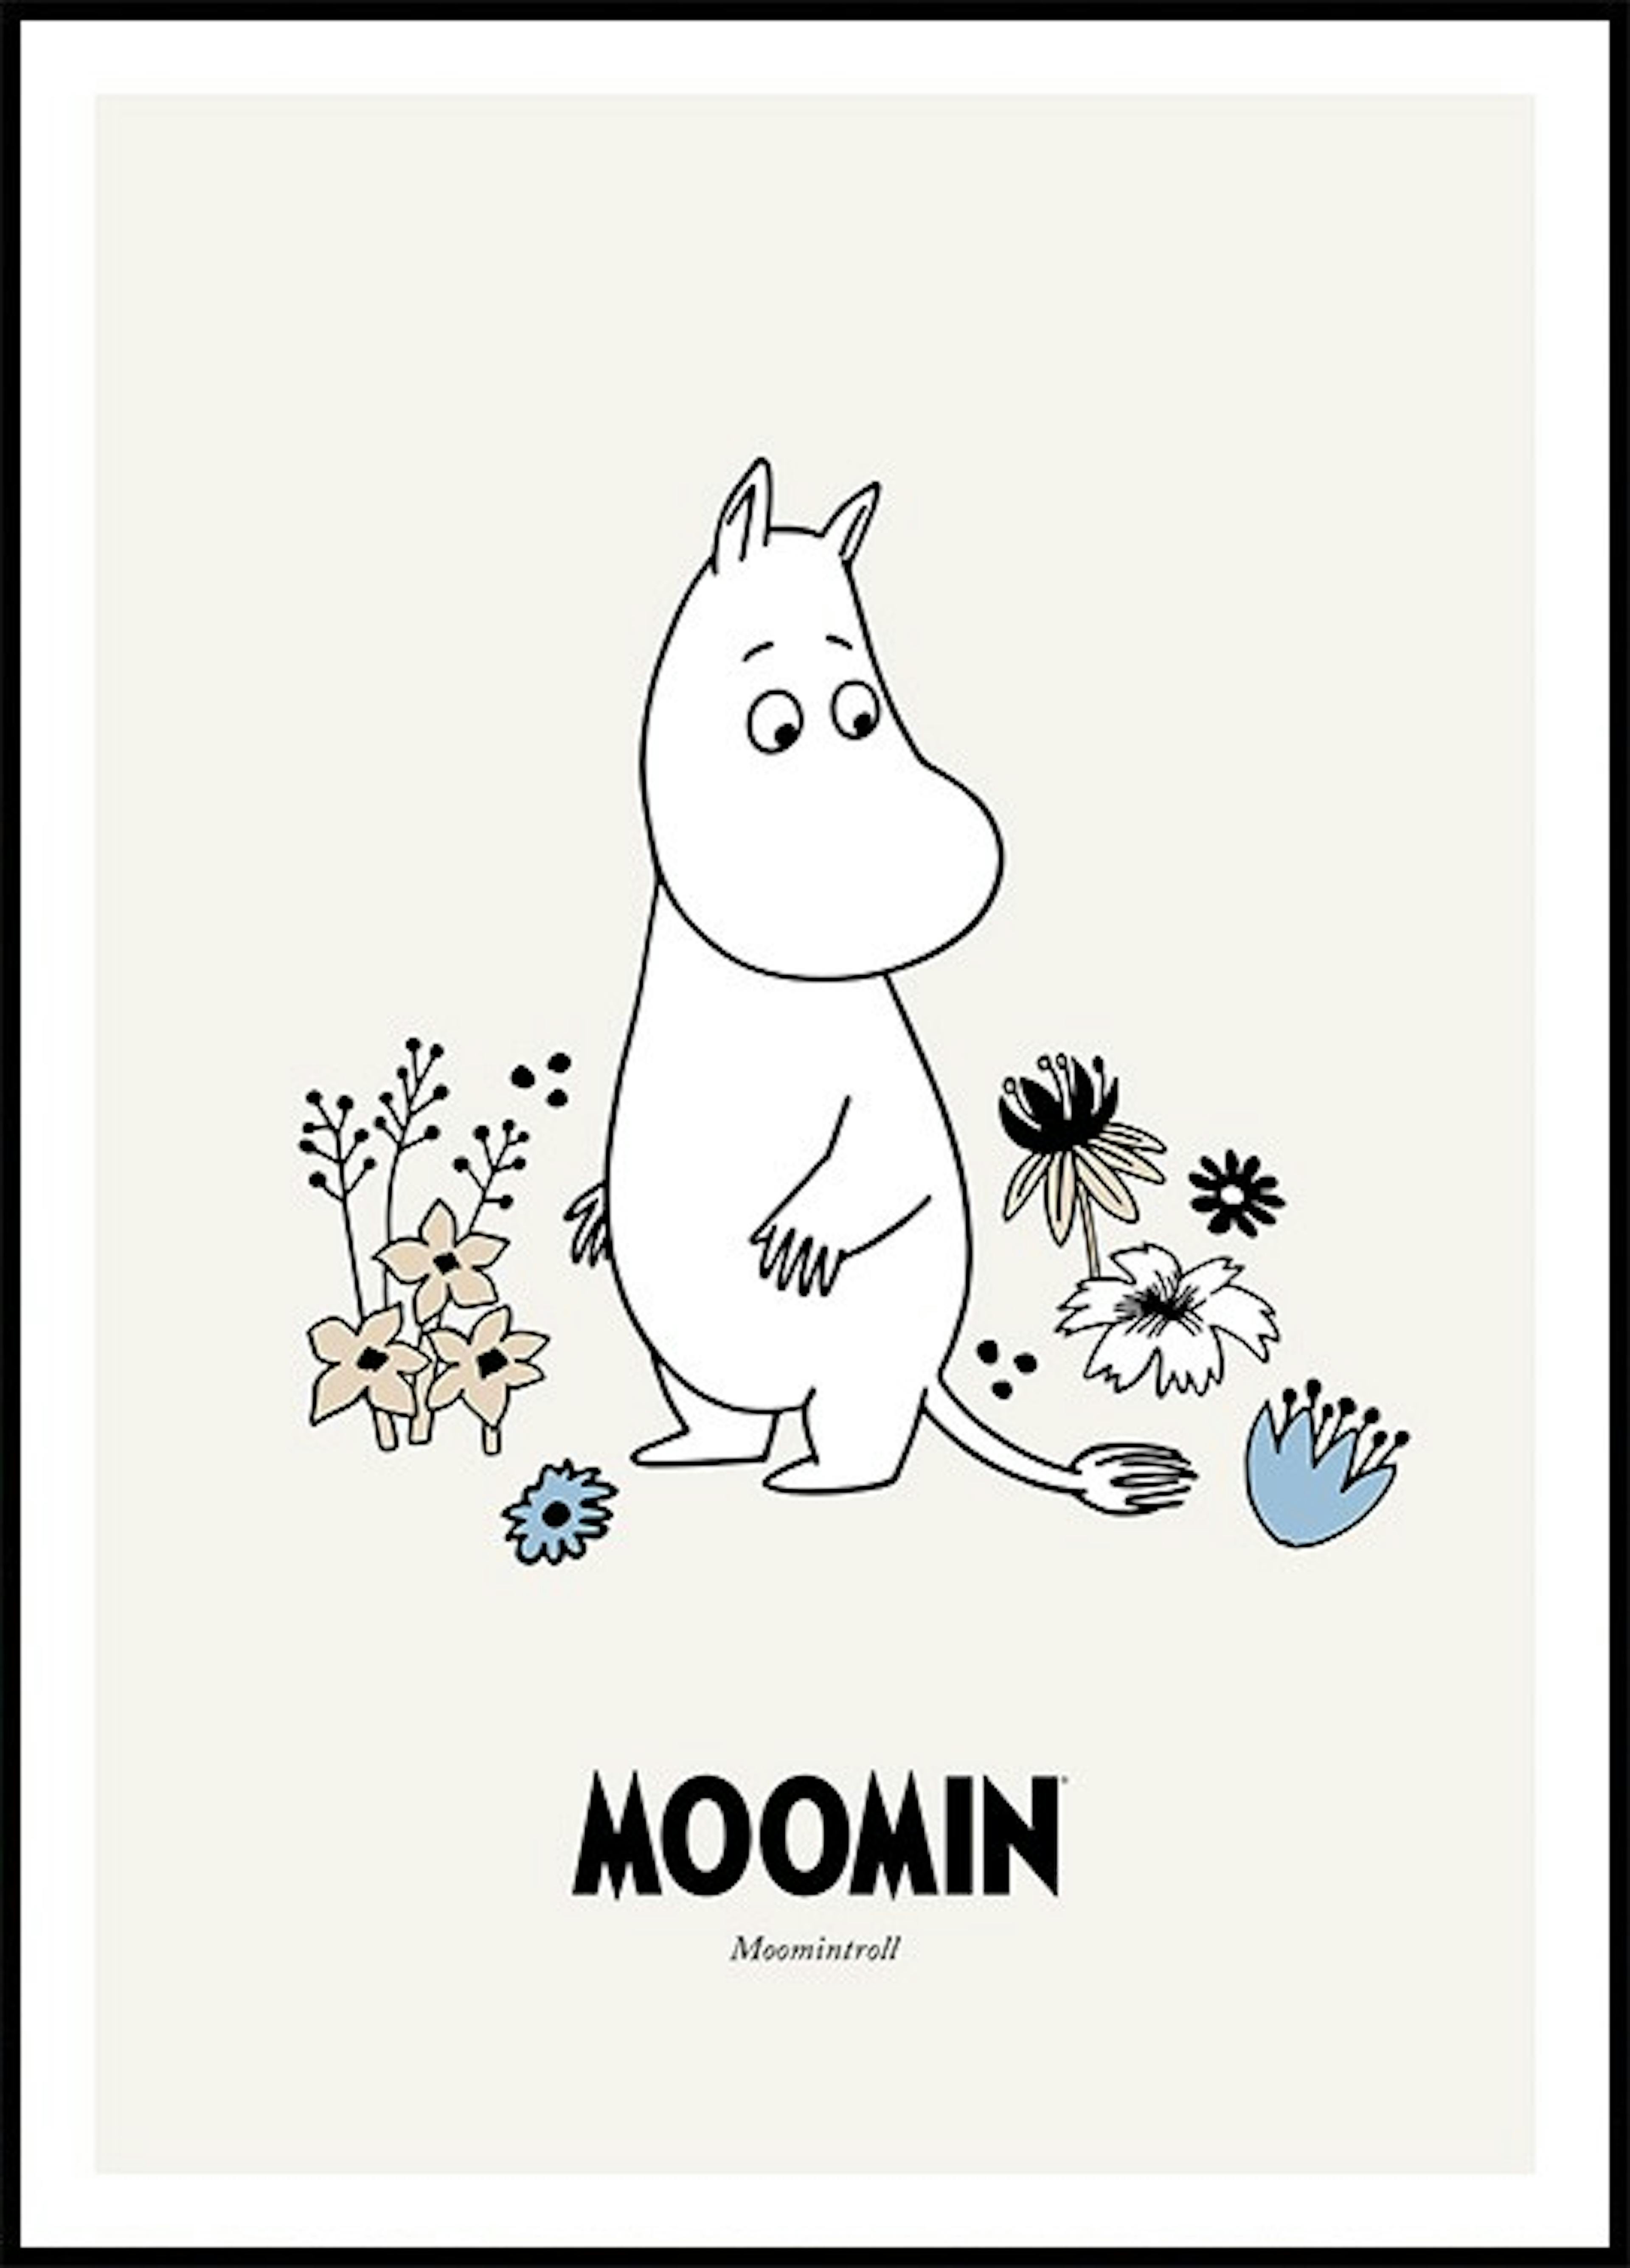 Moomin - Moomintroll Poster 0